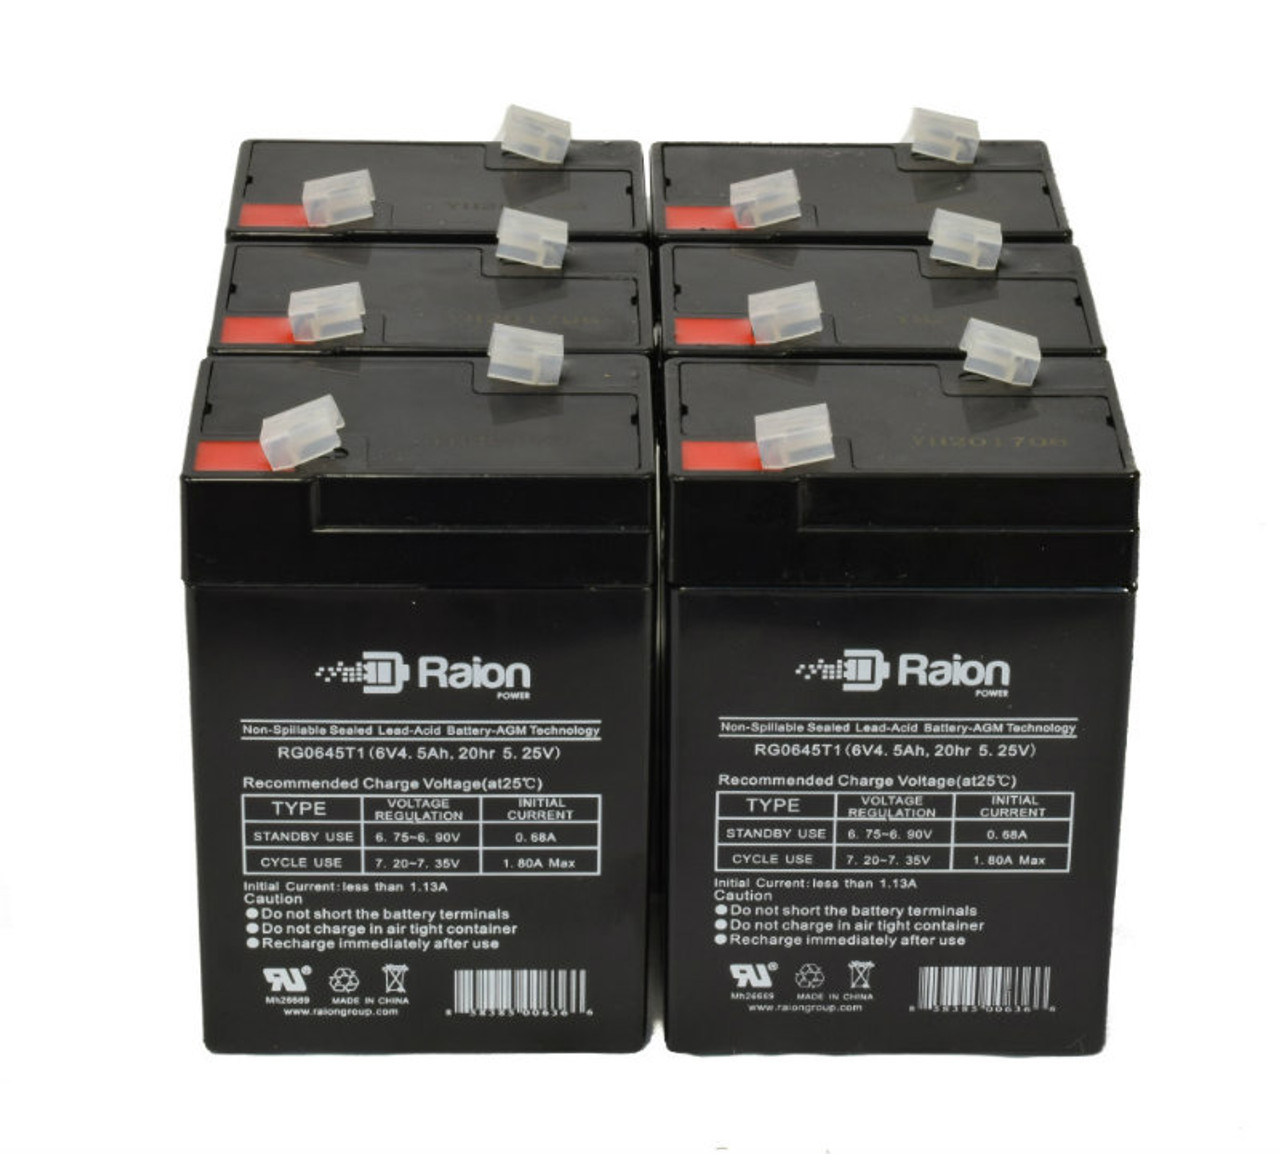 Raion Power 6V 4.5Ah Replacement Emergency Light Battery for Dual-Lite EPP - 6 Pack